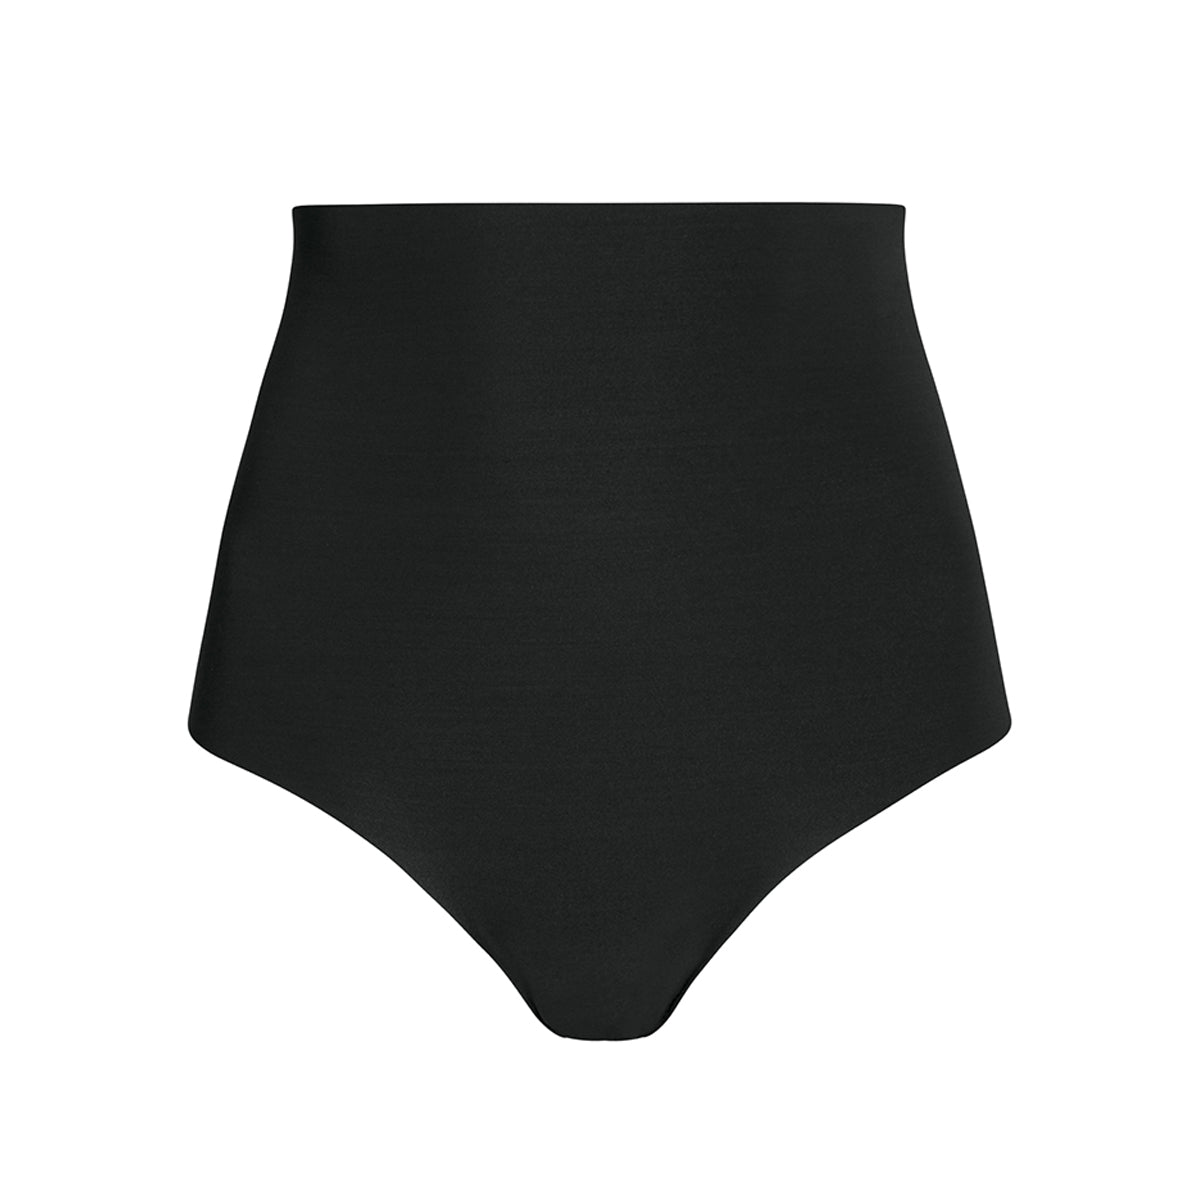 Commando black thong control shapewear slimming seamless underwear lingerie canada linea intima toronto